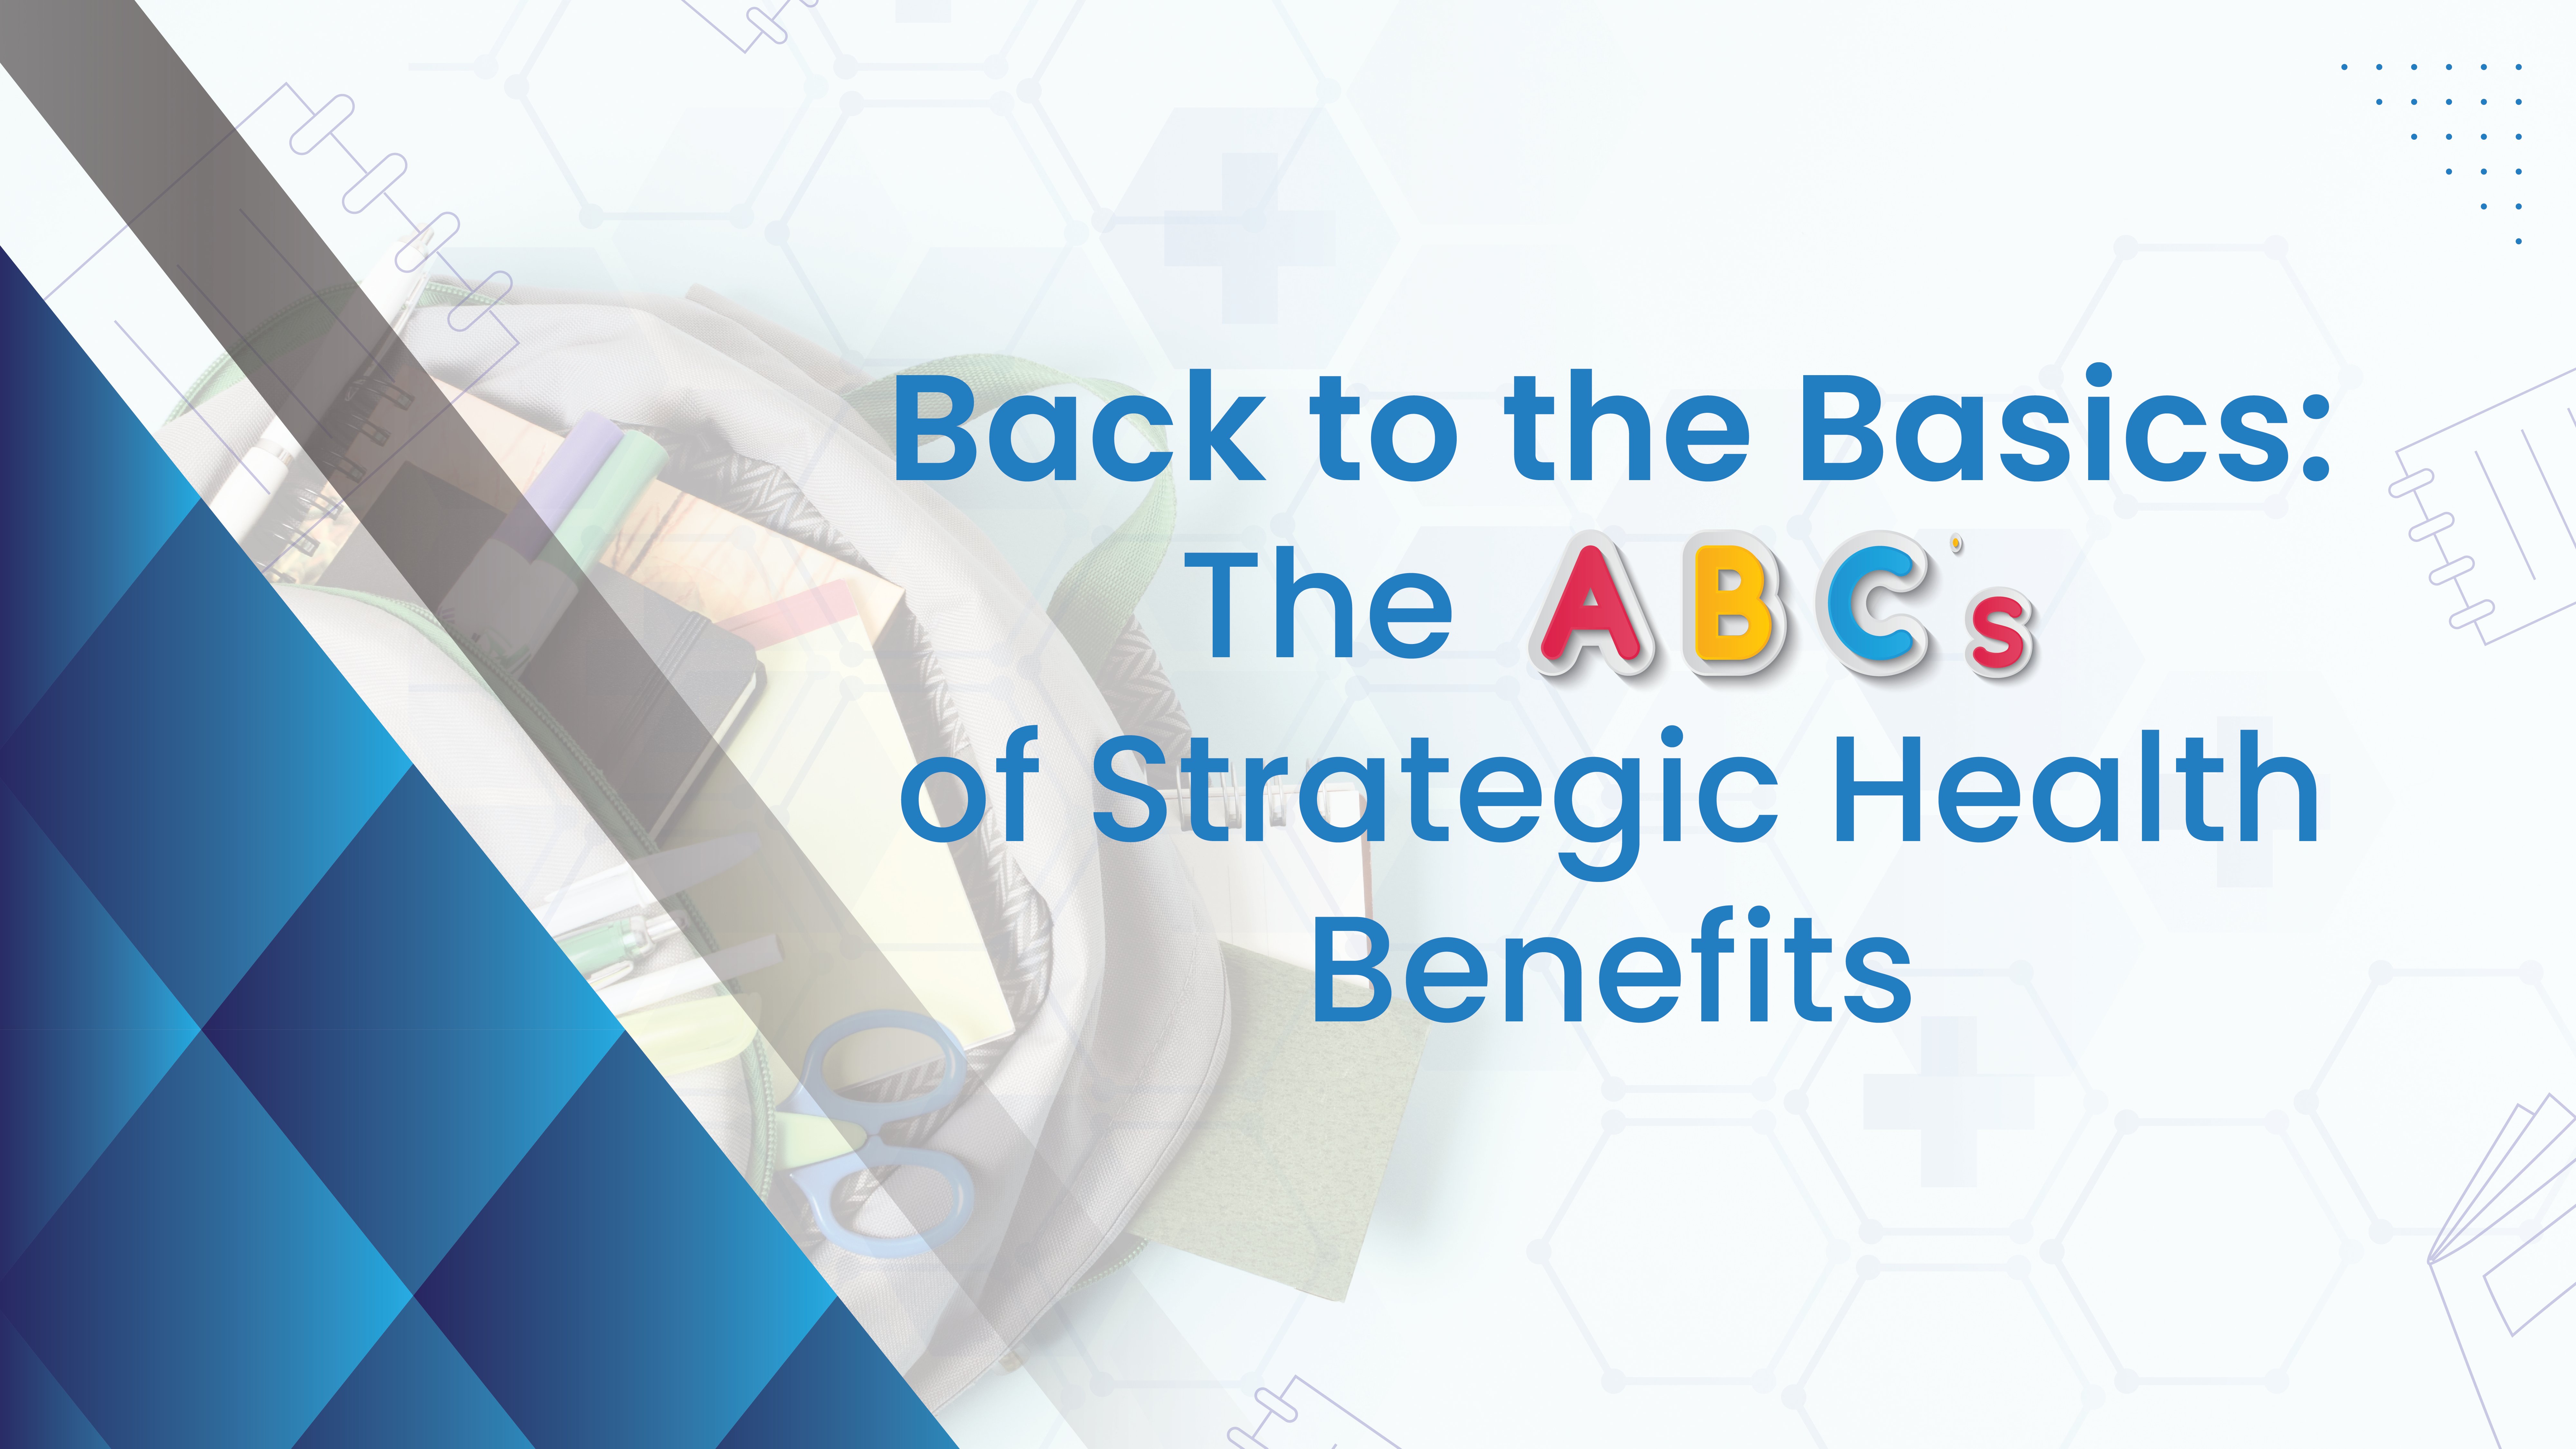 The ABC's of strategic health benefits